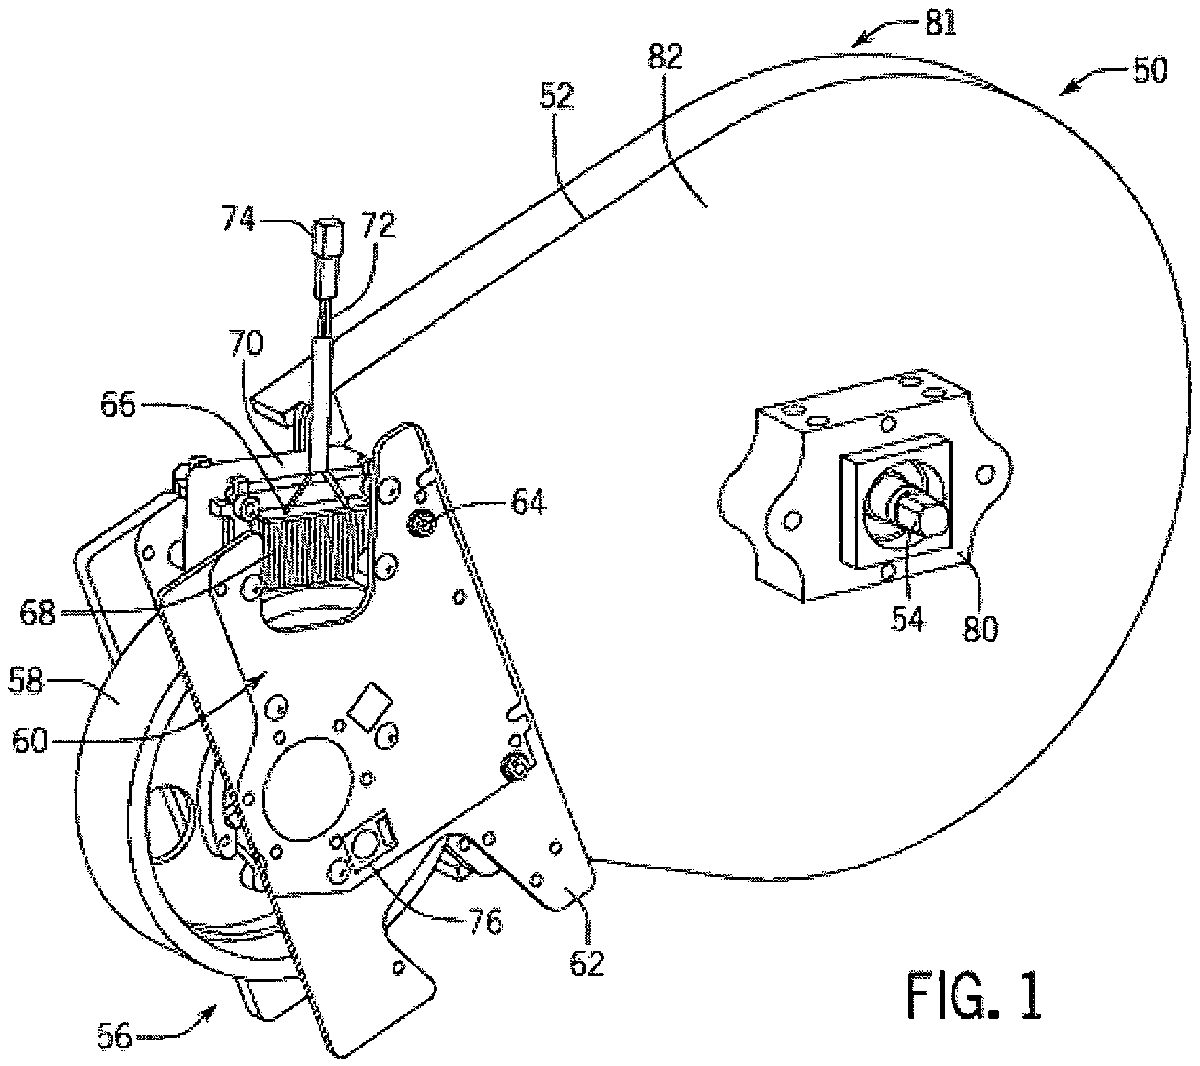 patent drawings for sram indoor bike trainer